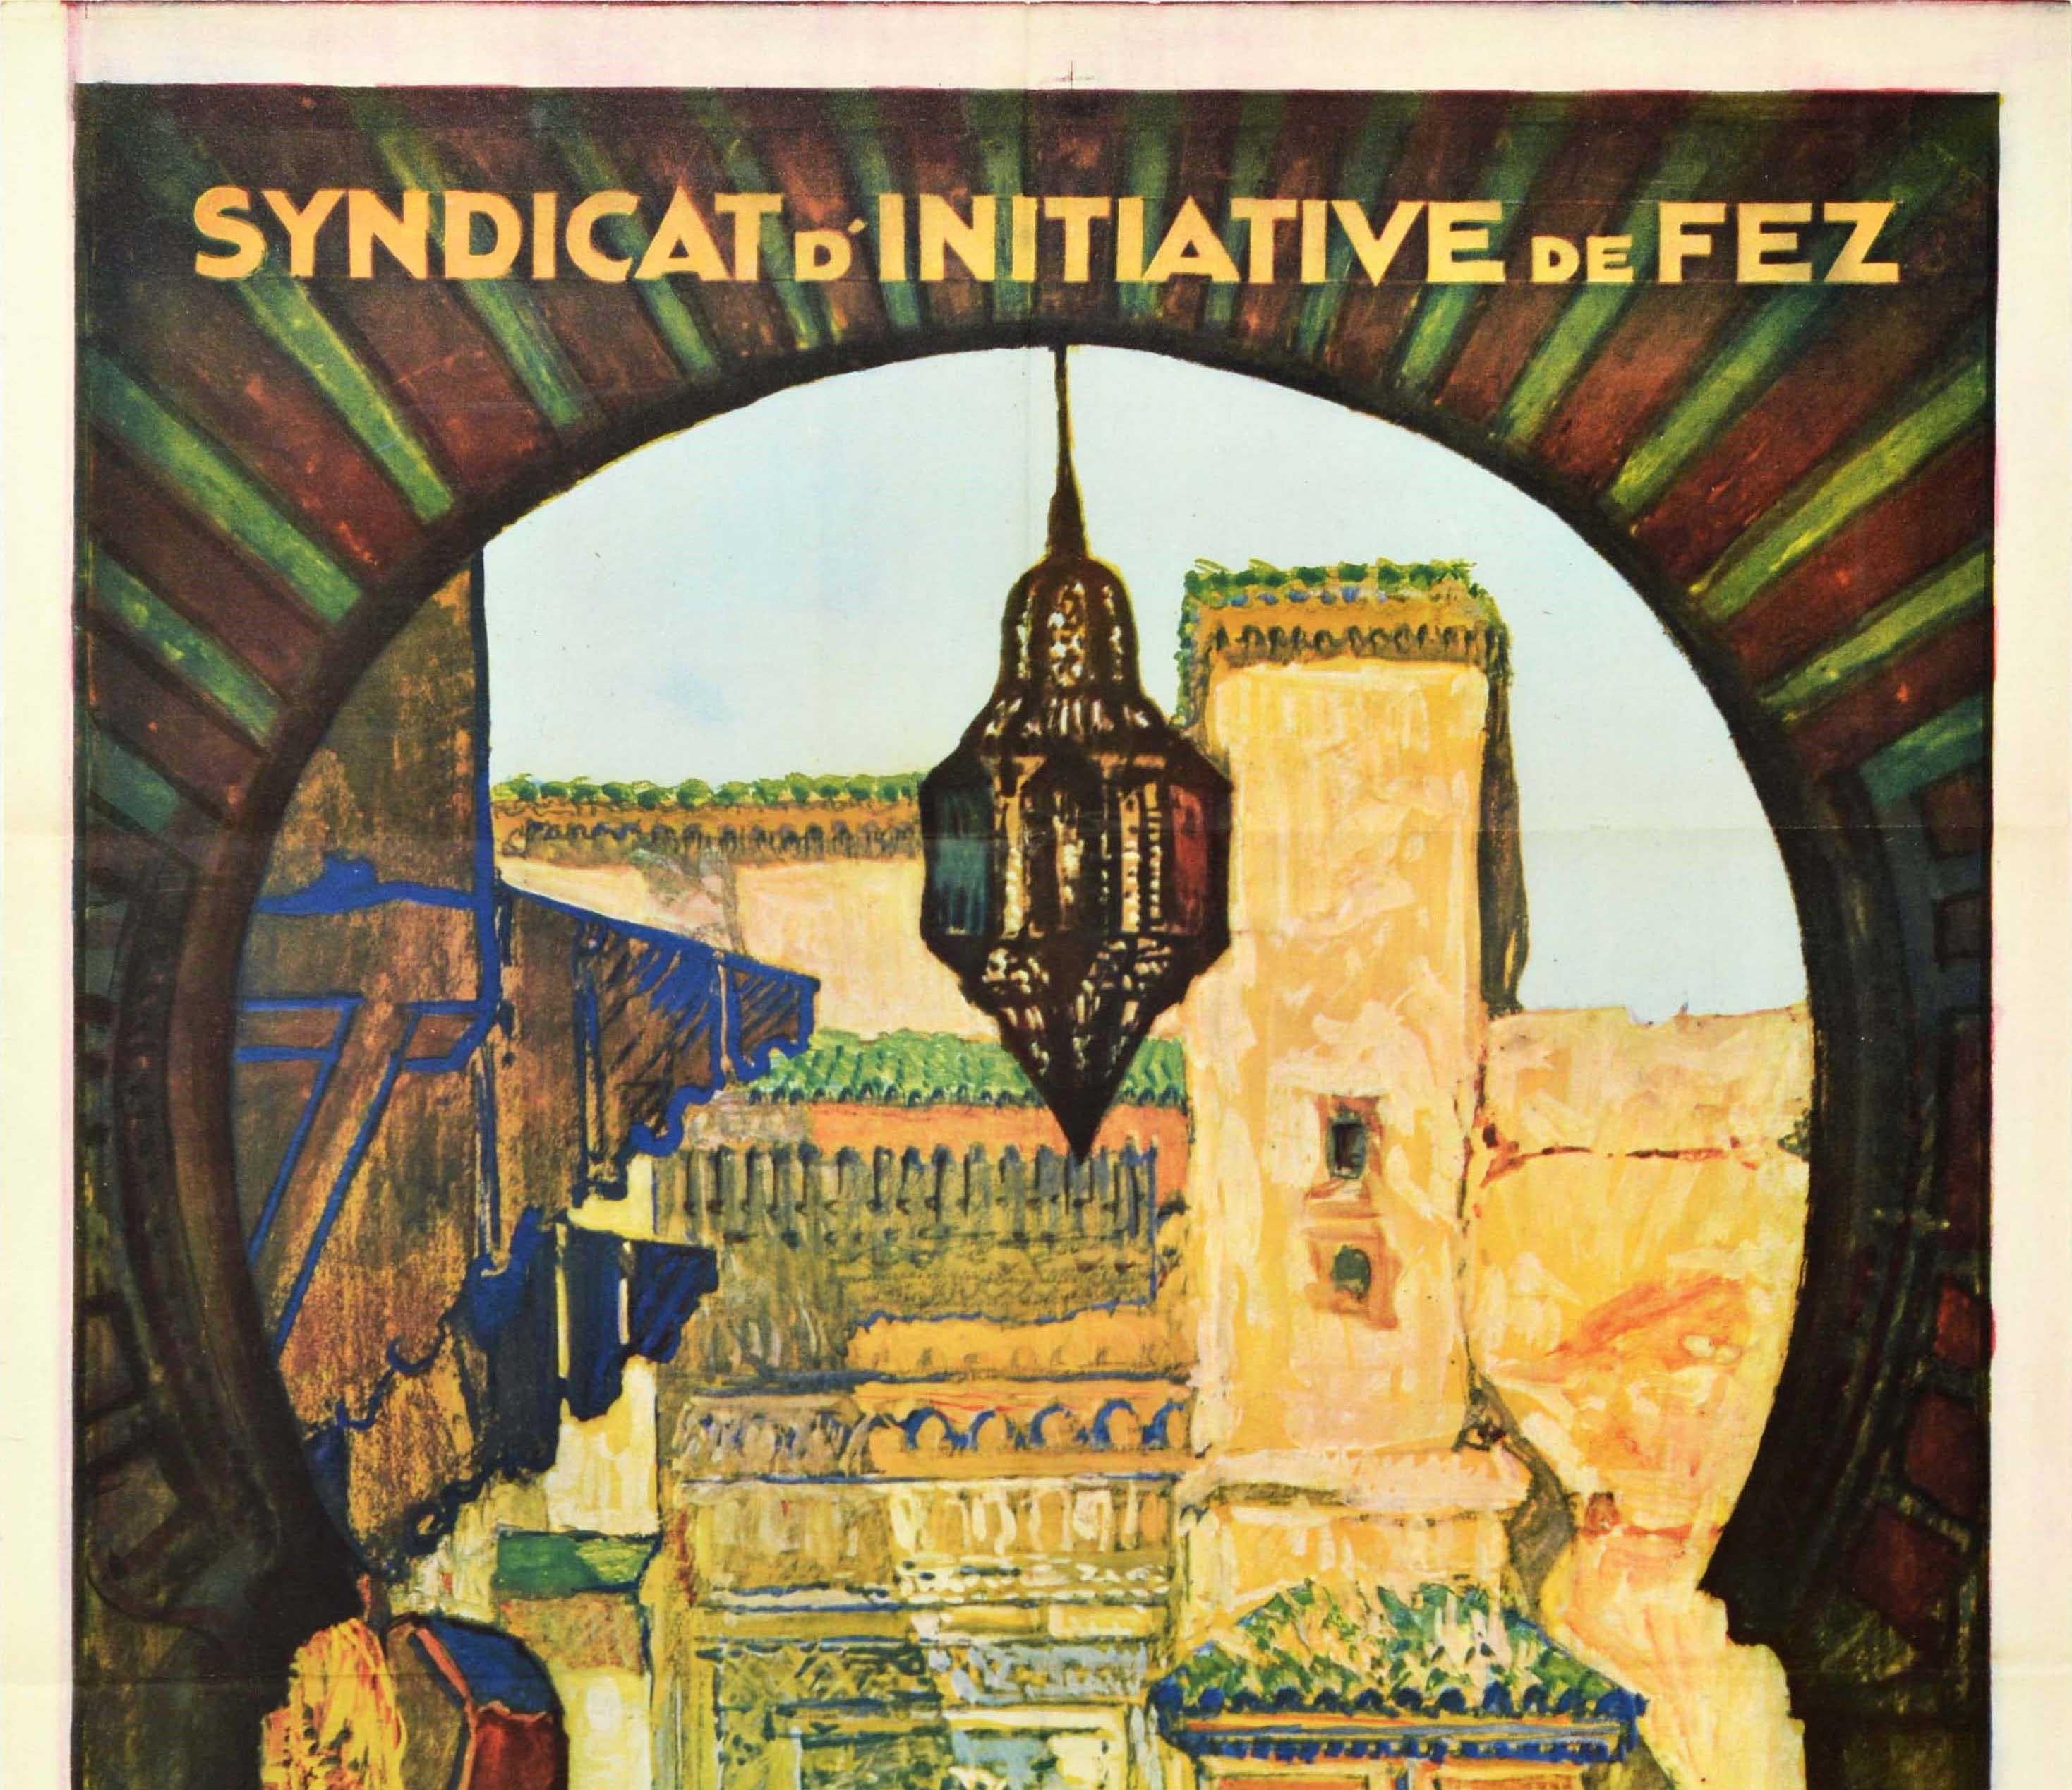 Original Vintage Travel Poster Come Visit Venez Visiter Fez Morocco North Africa - Print by Pontoy